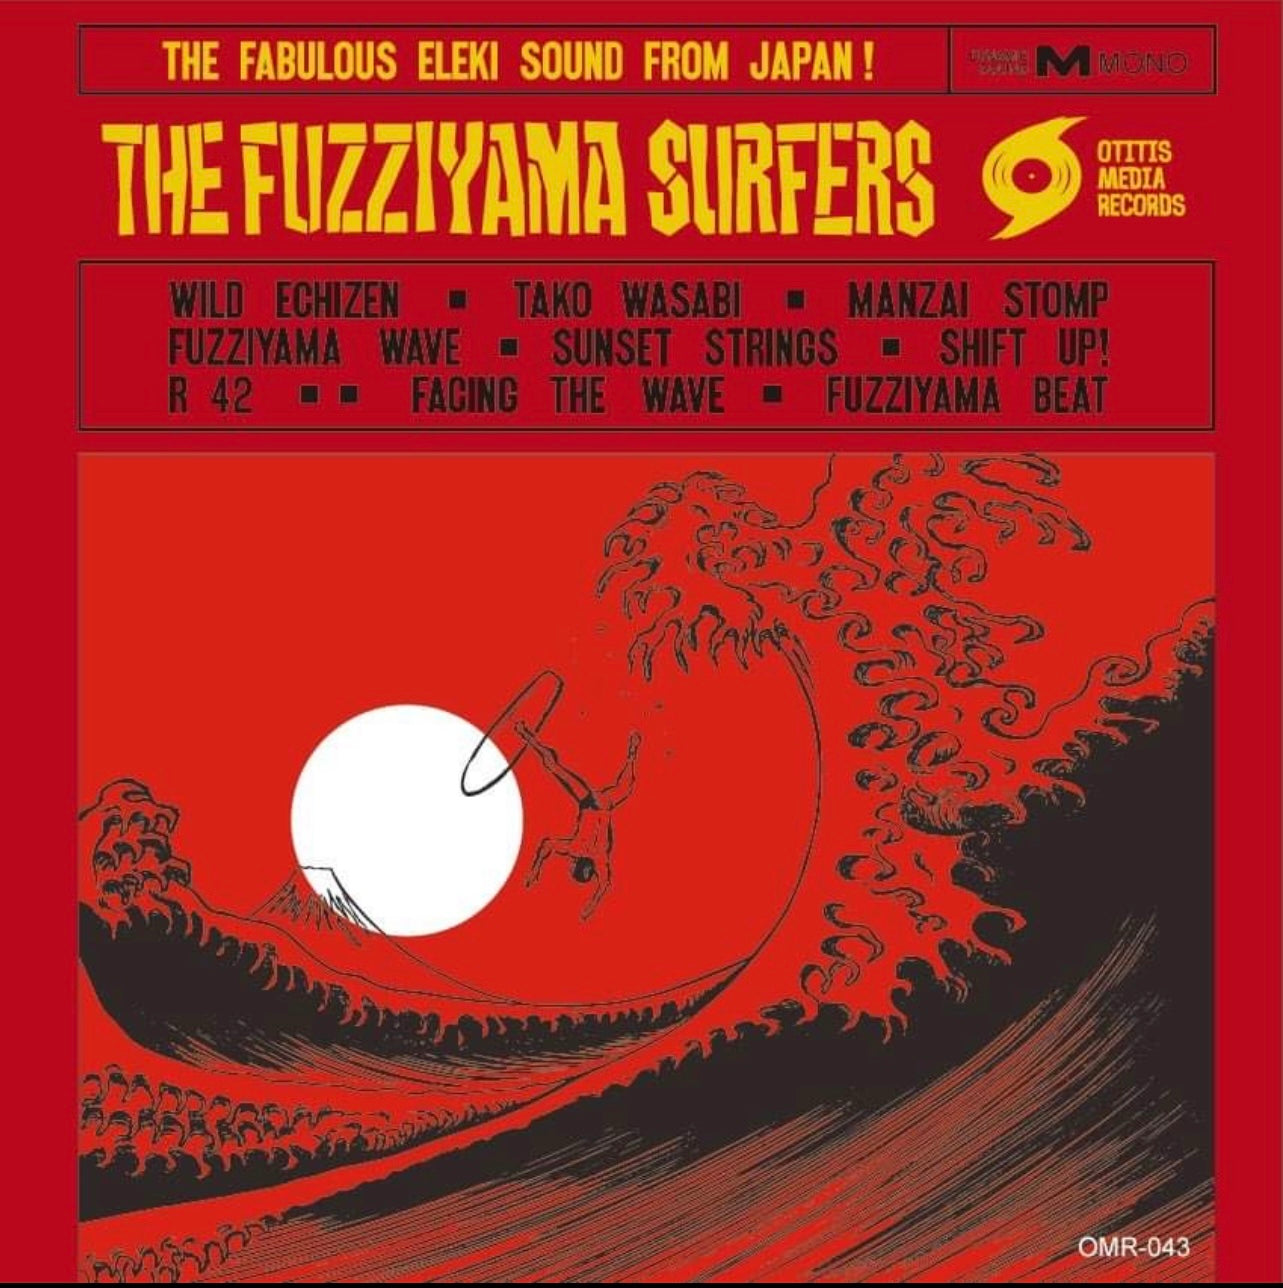 OMR-043 The Fuzziyama Surfers “Wild Echizen” 12” VINYL